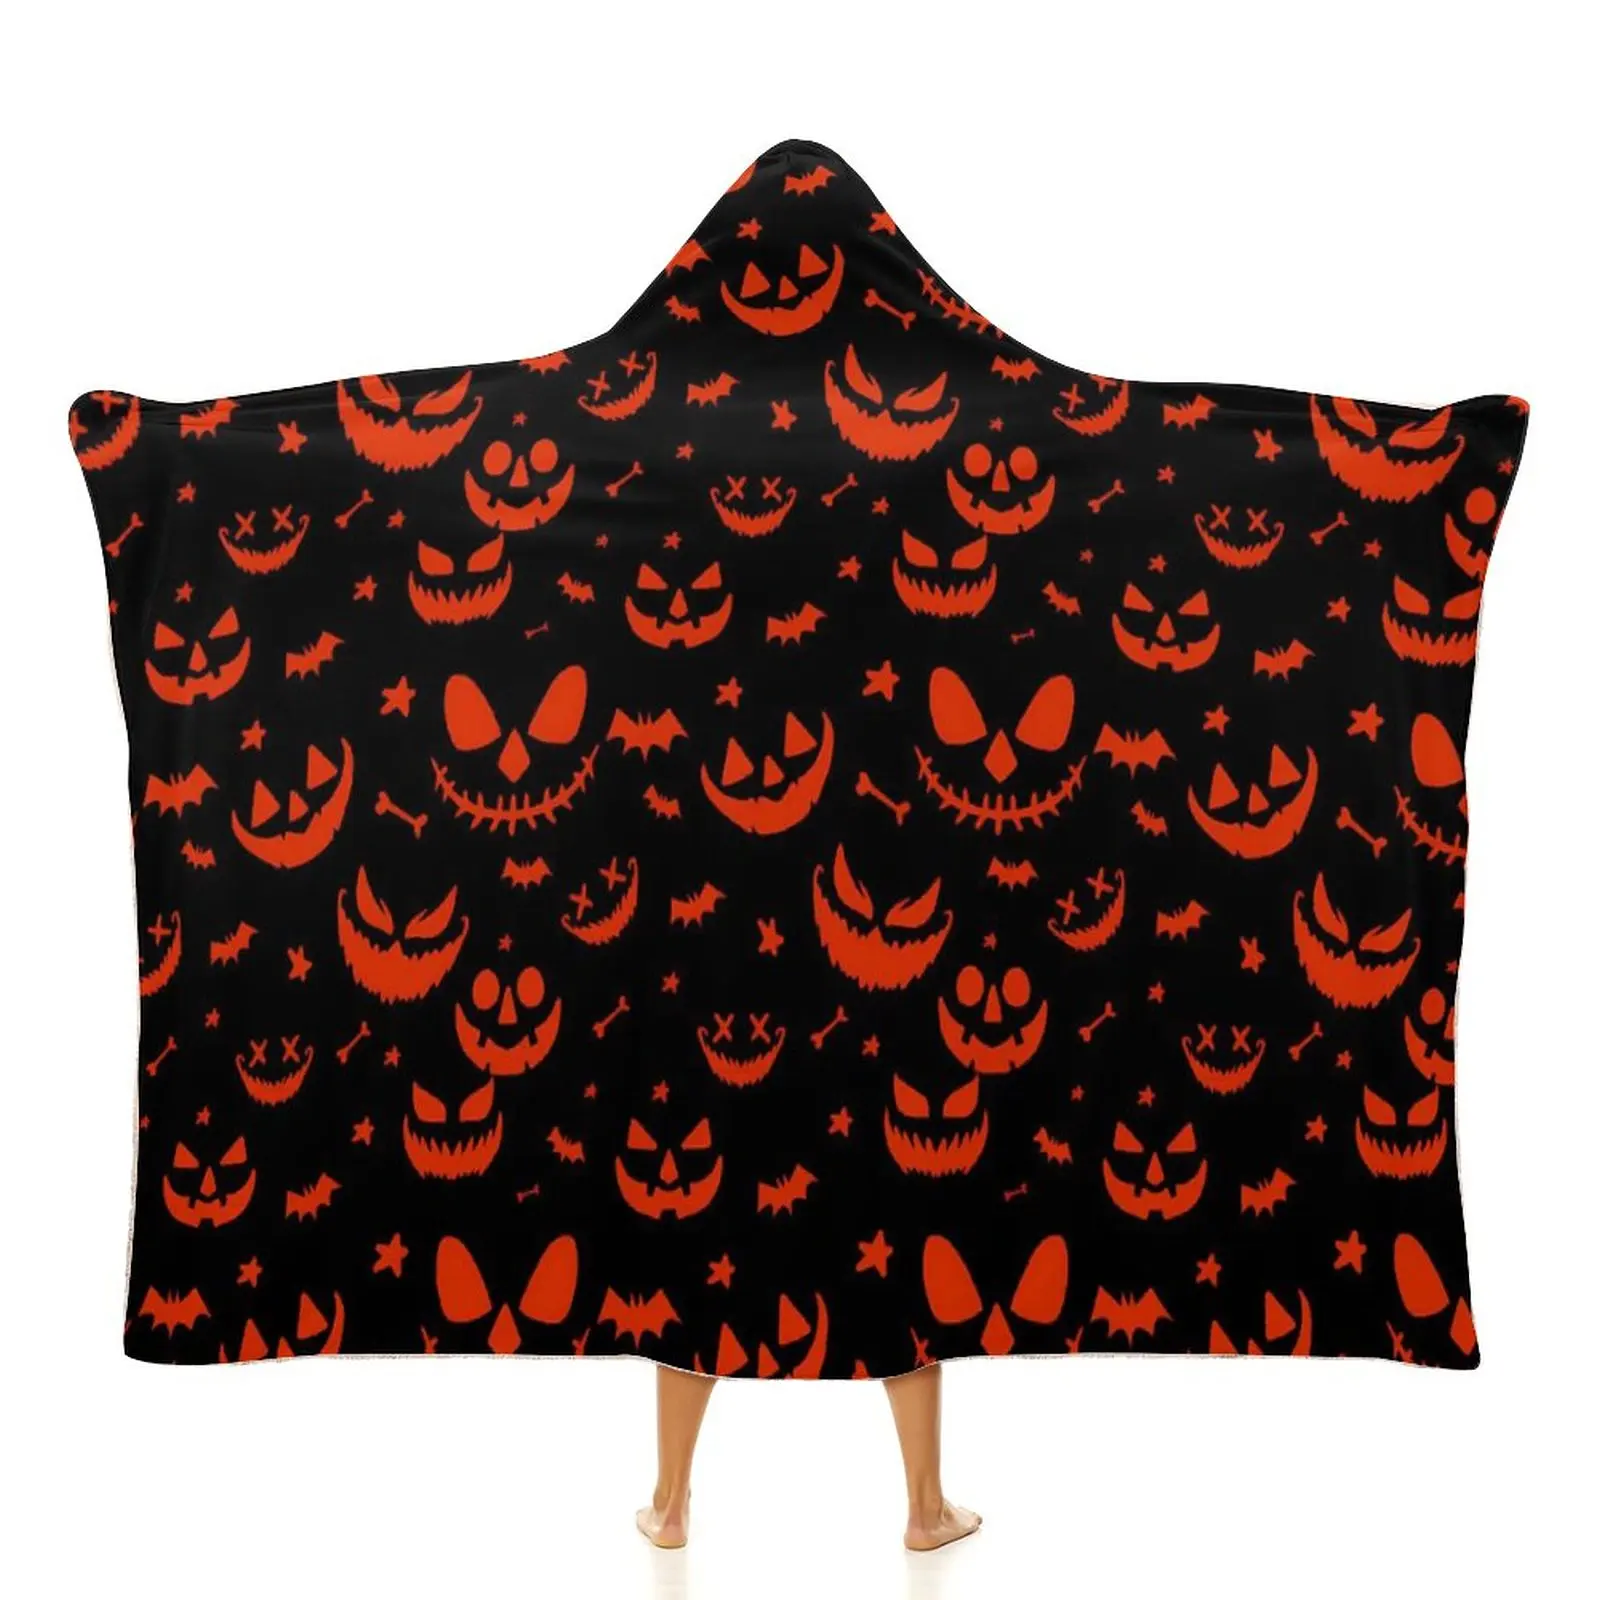 

Orange Pumpkin Blanket Spooky Halloween Cheap Warm With Hood Bedspread Fleece Camping Super Soft Blanket